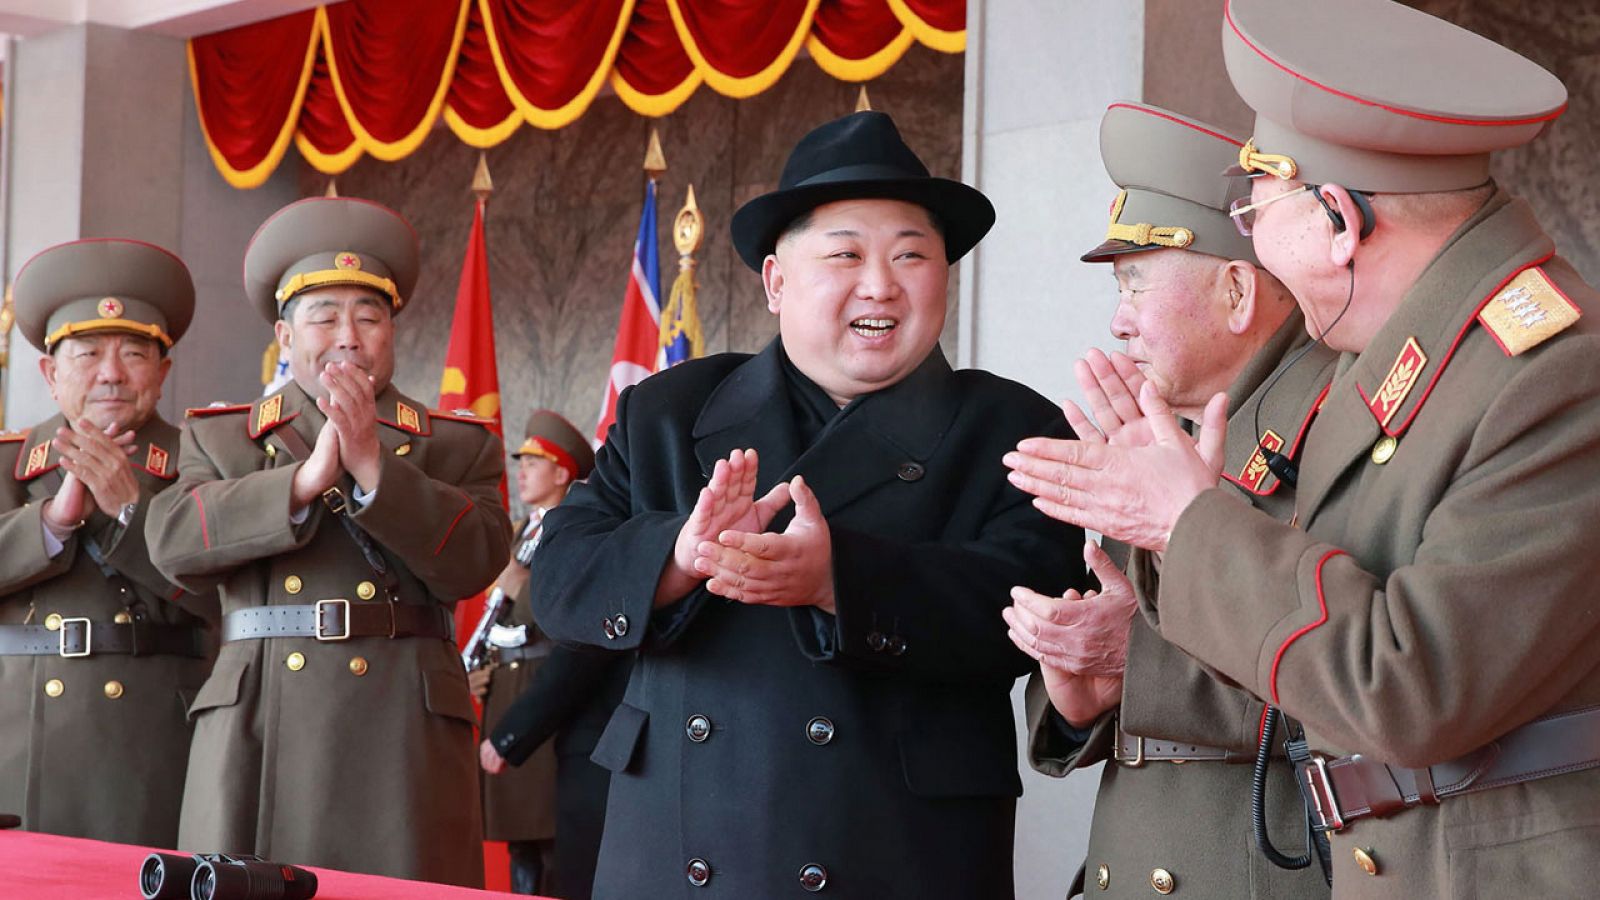 Kim Jong-un aboga por continuar con la reconciliación entre las dos Coreas